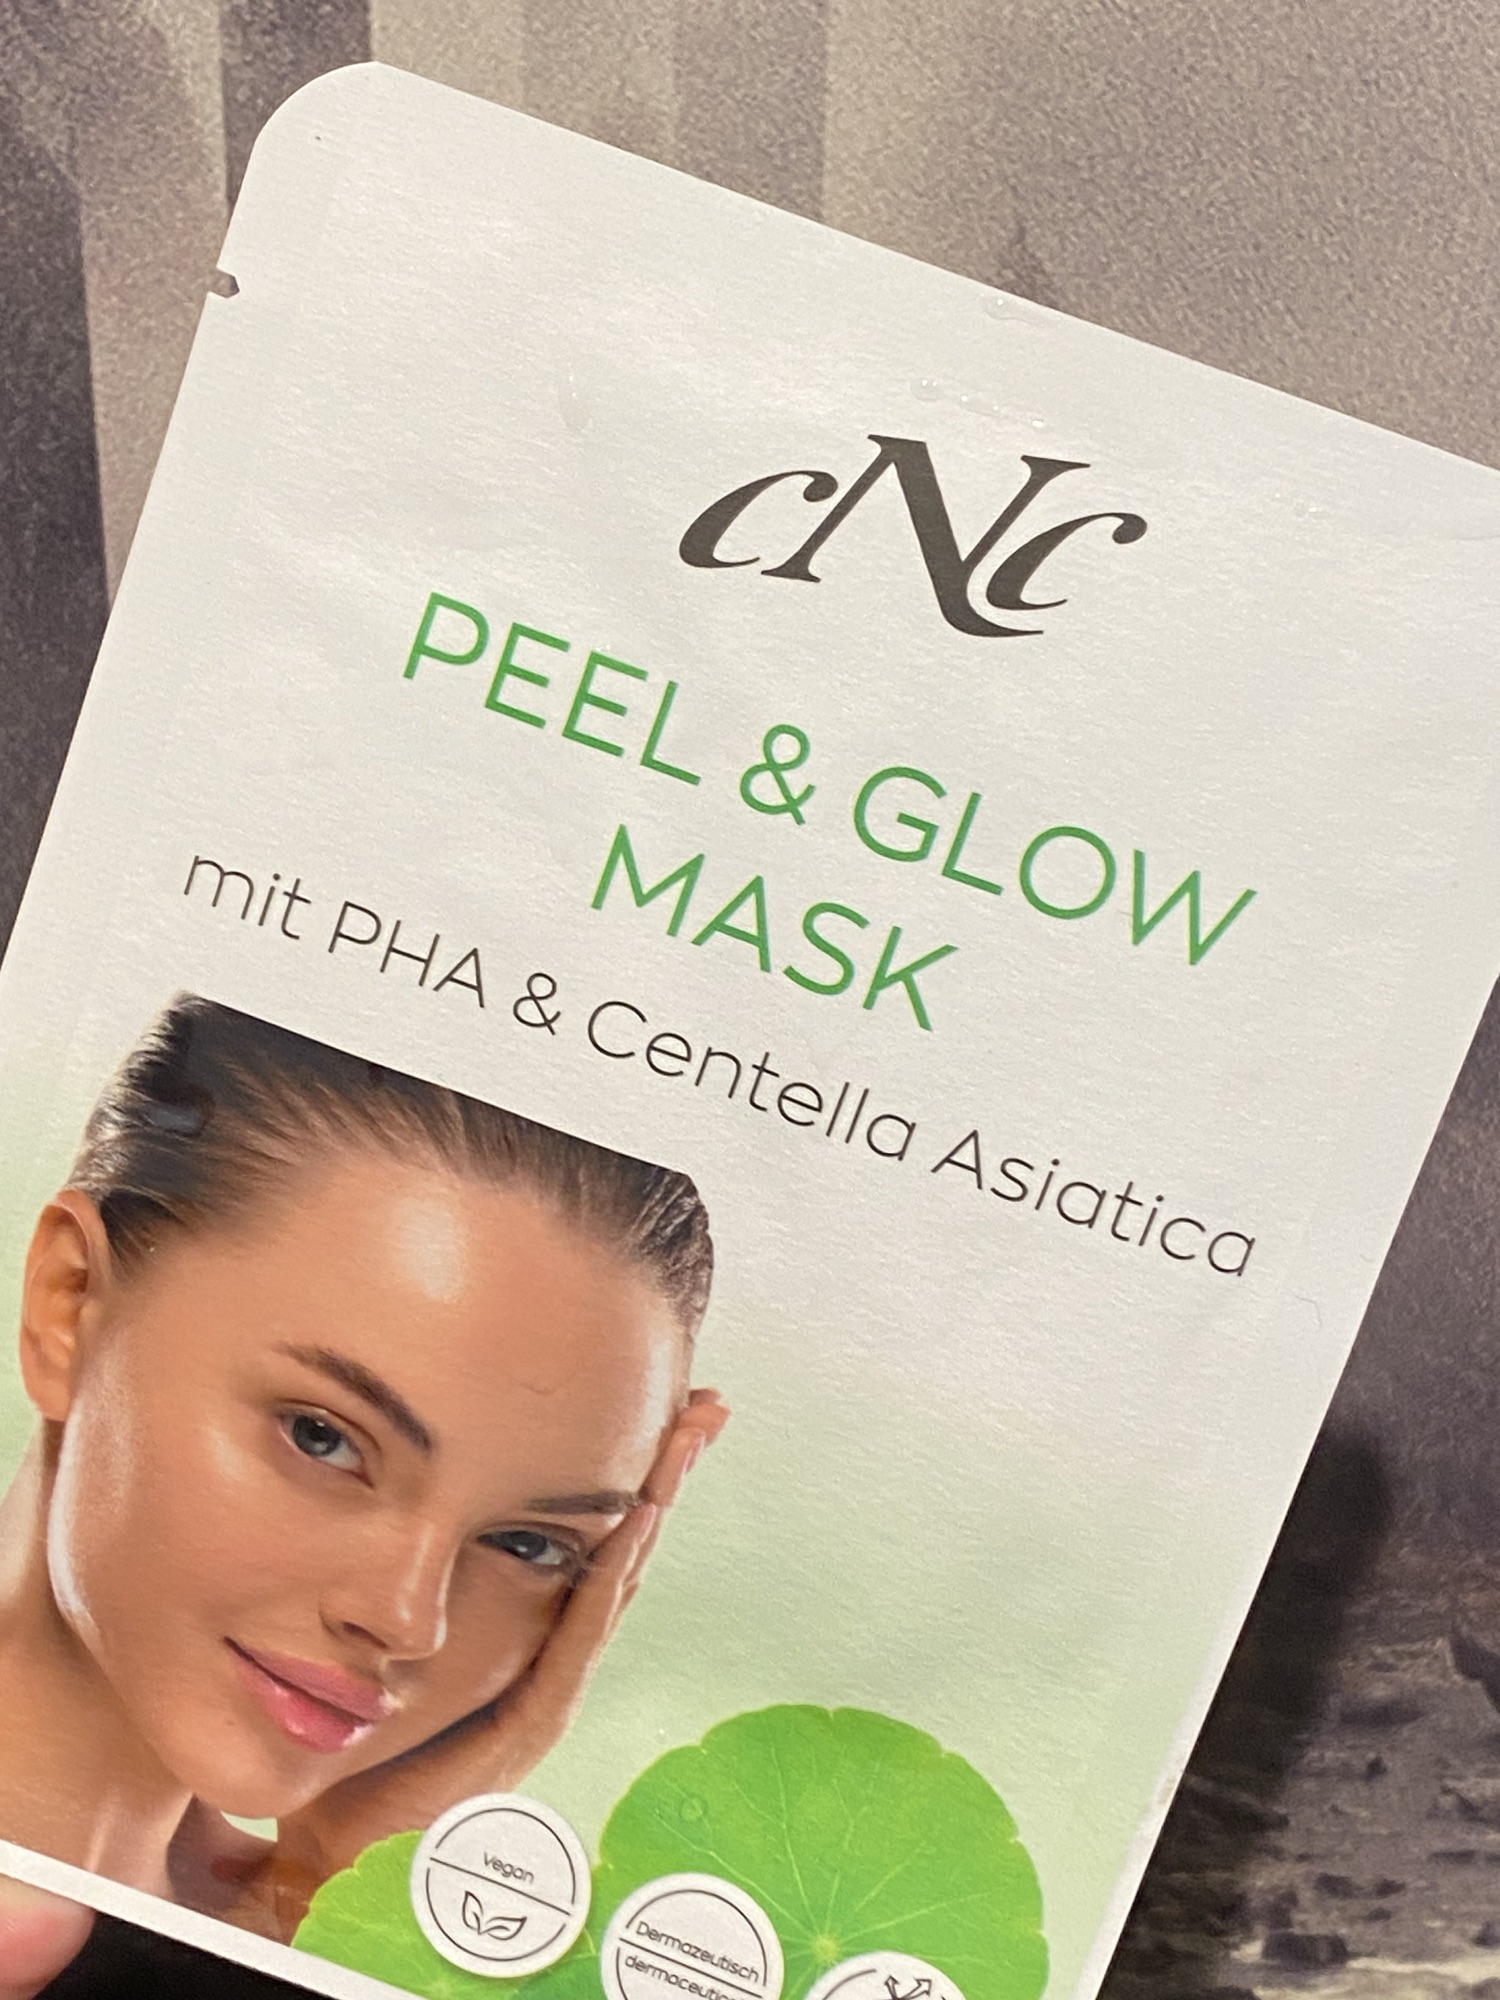 Cnc Peel & Glow mask